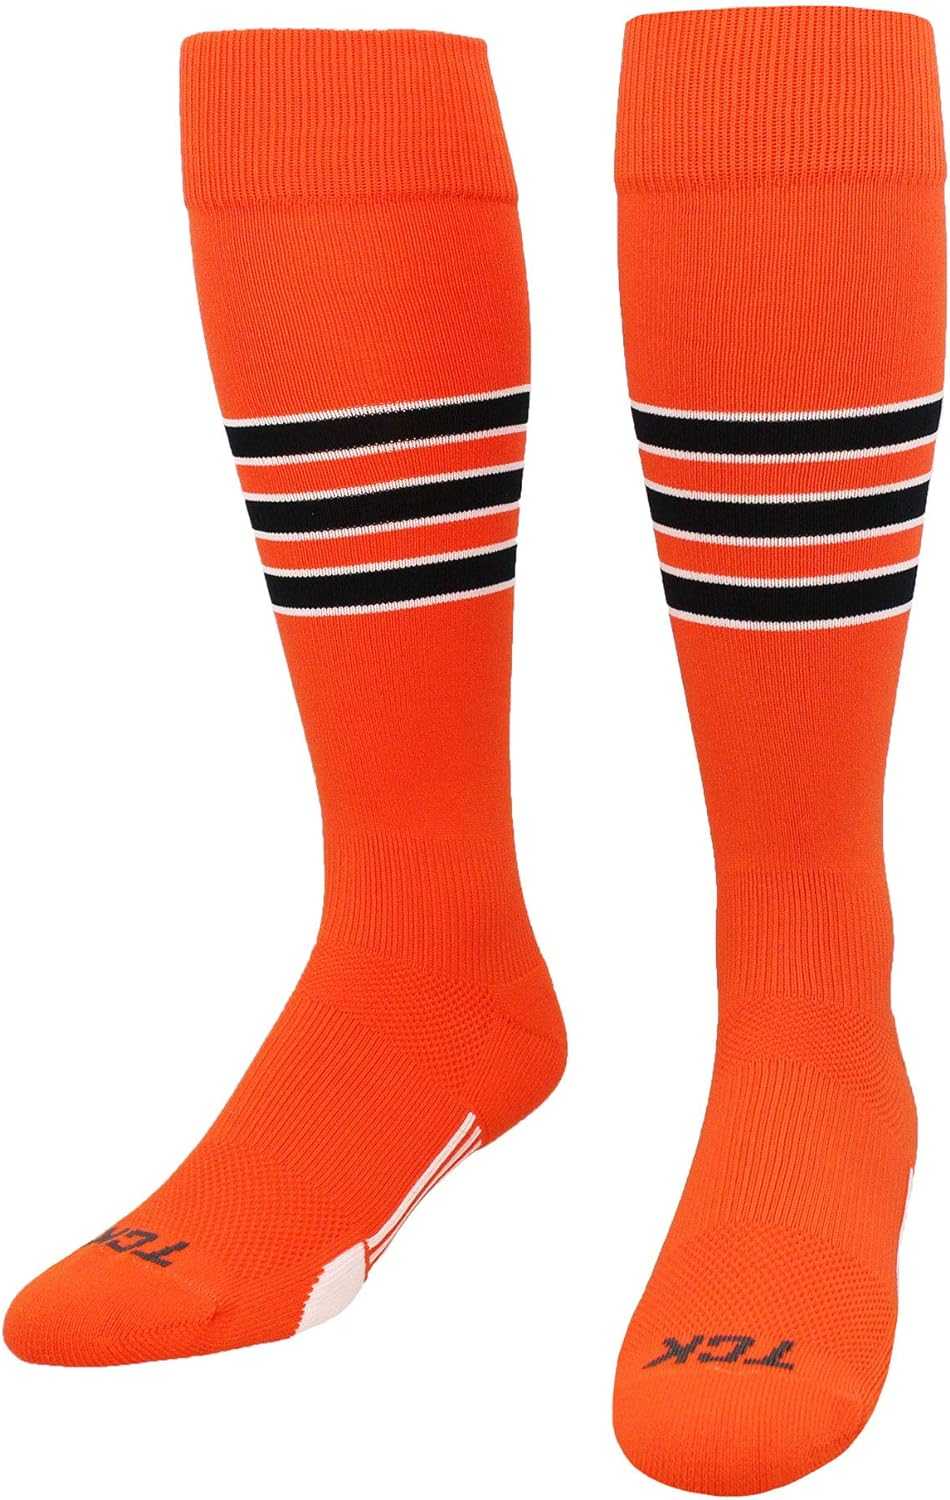 TCK Dugout Knee High Socks - Orange White Black - HIT a Double - 2